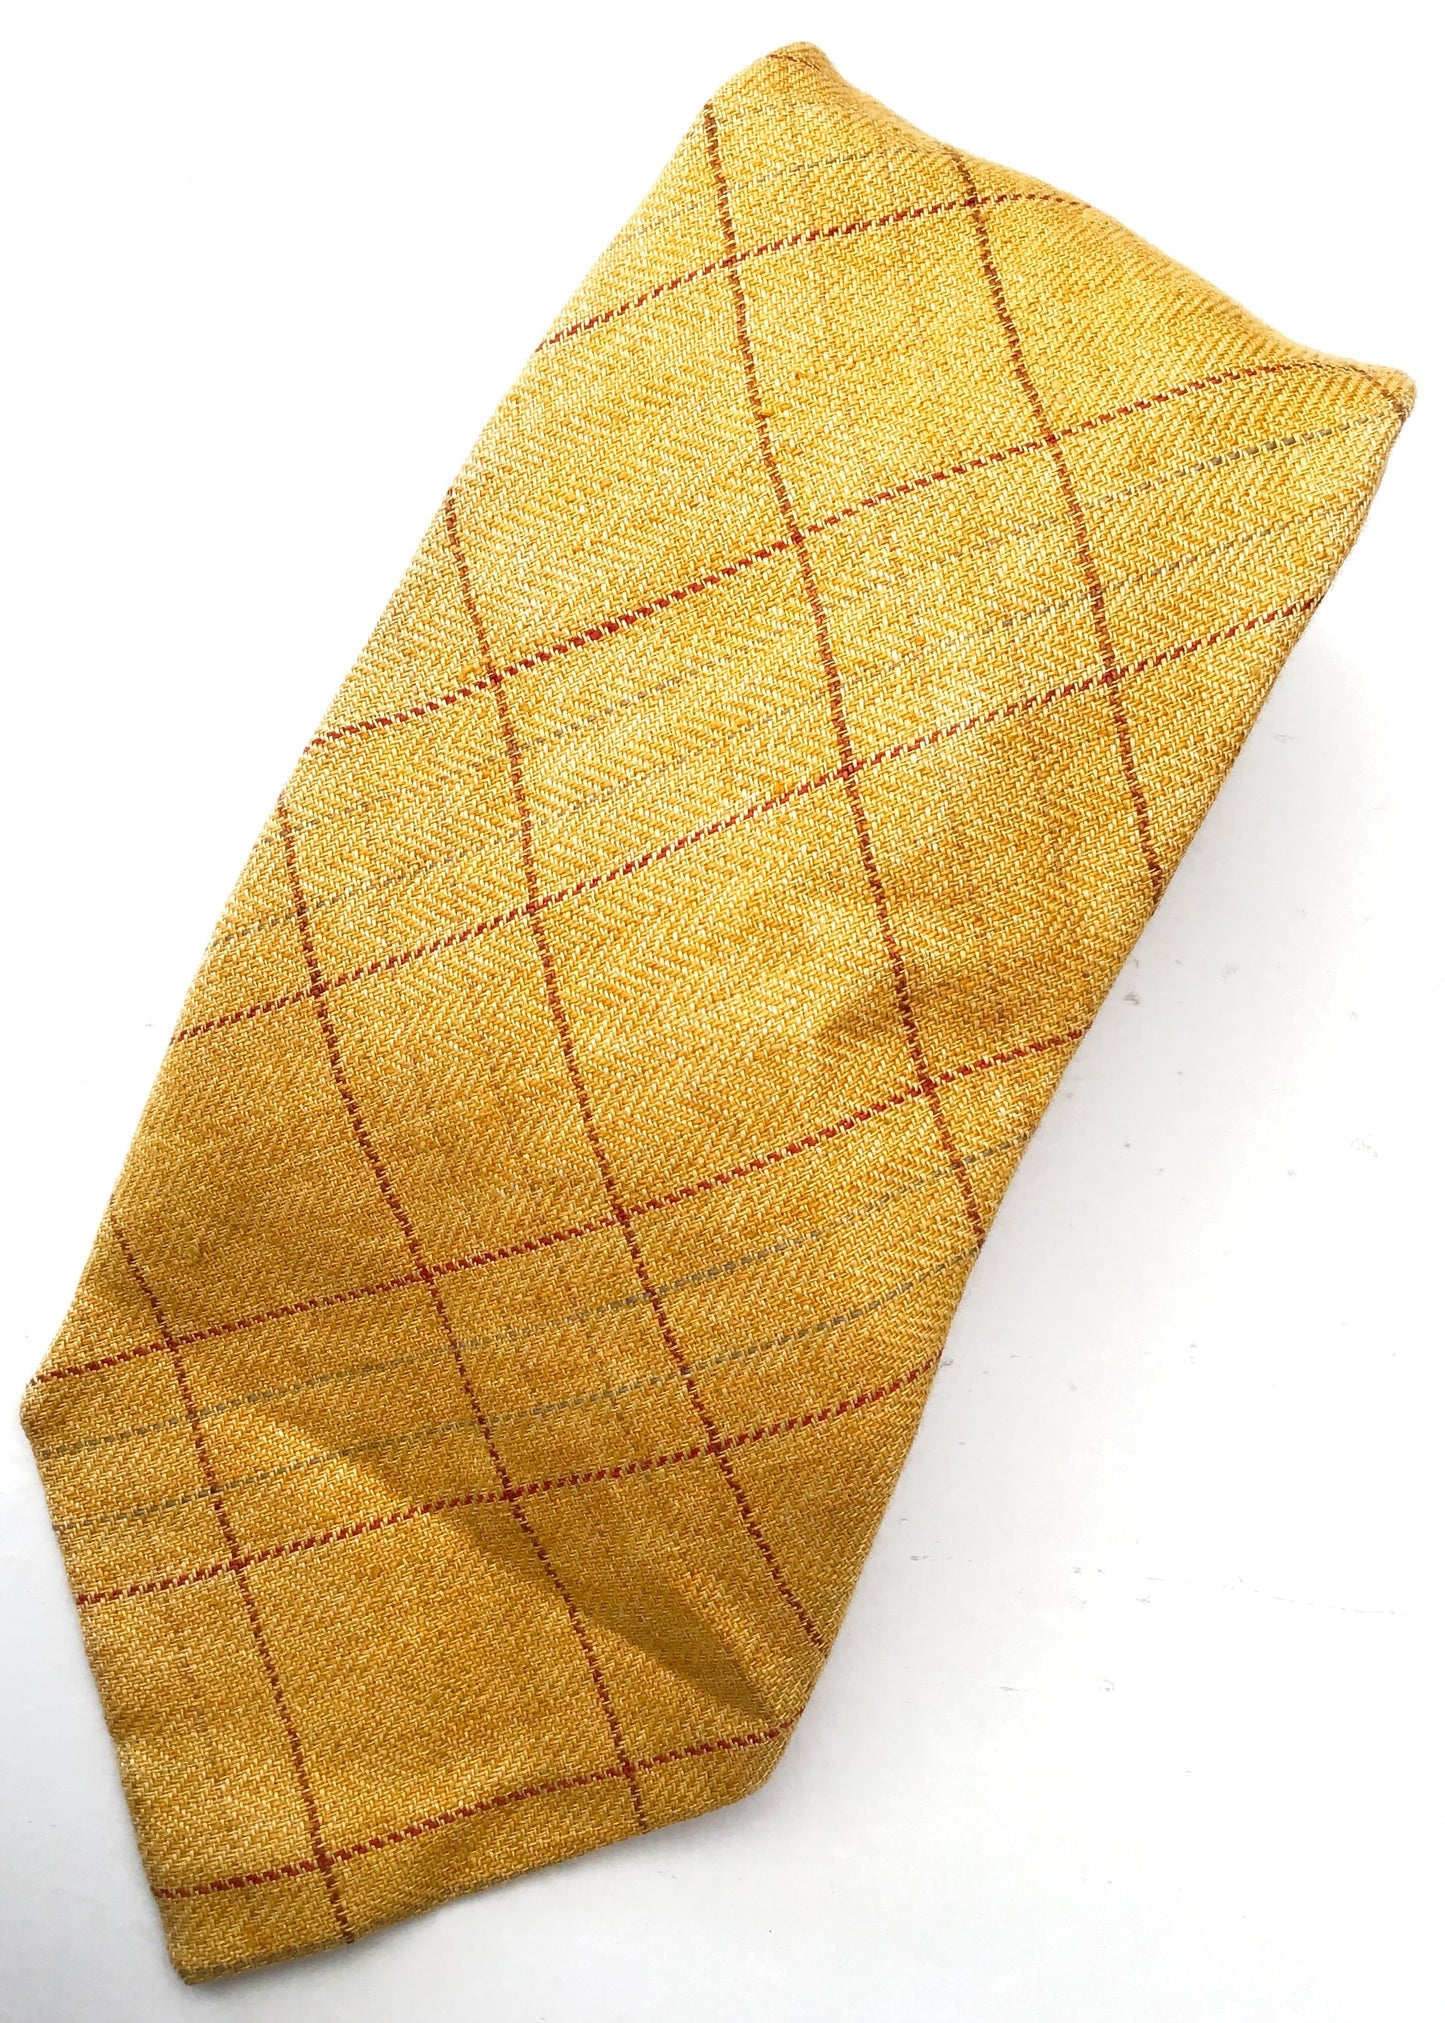 yellow linen neck tie by boggi of milan